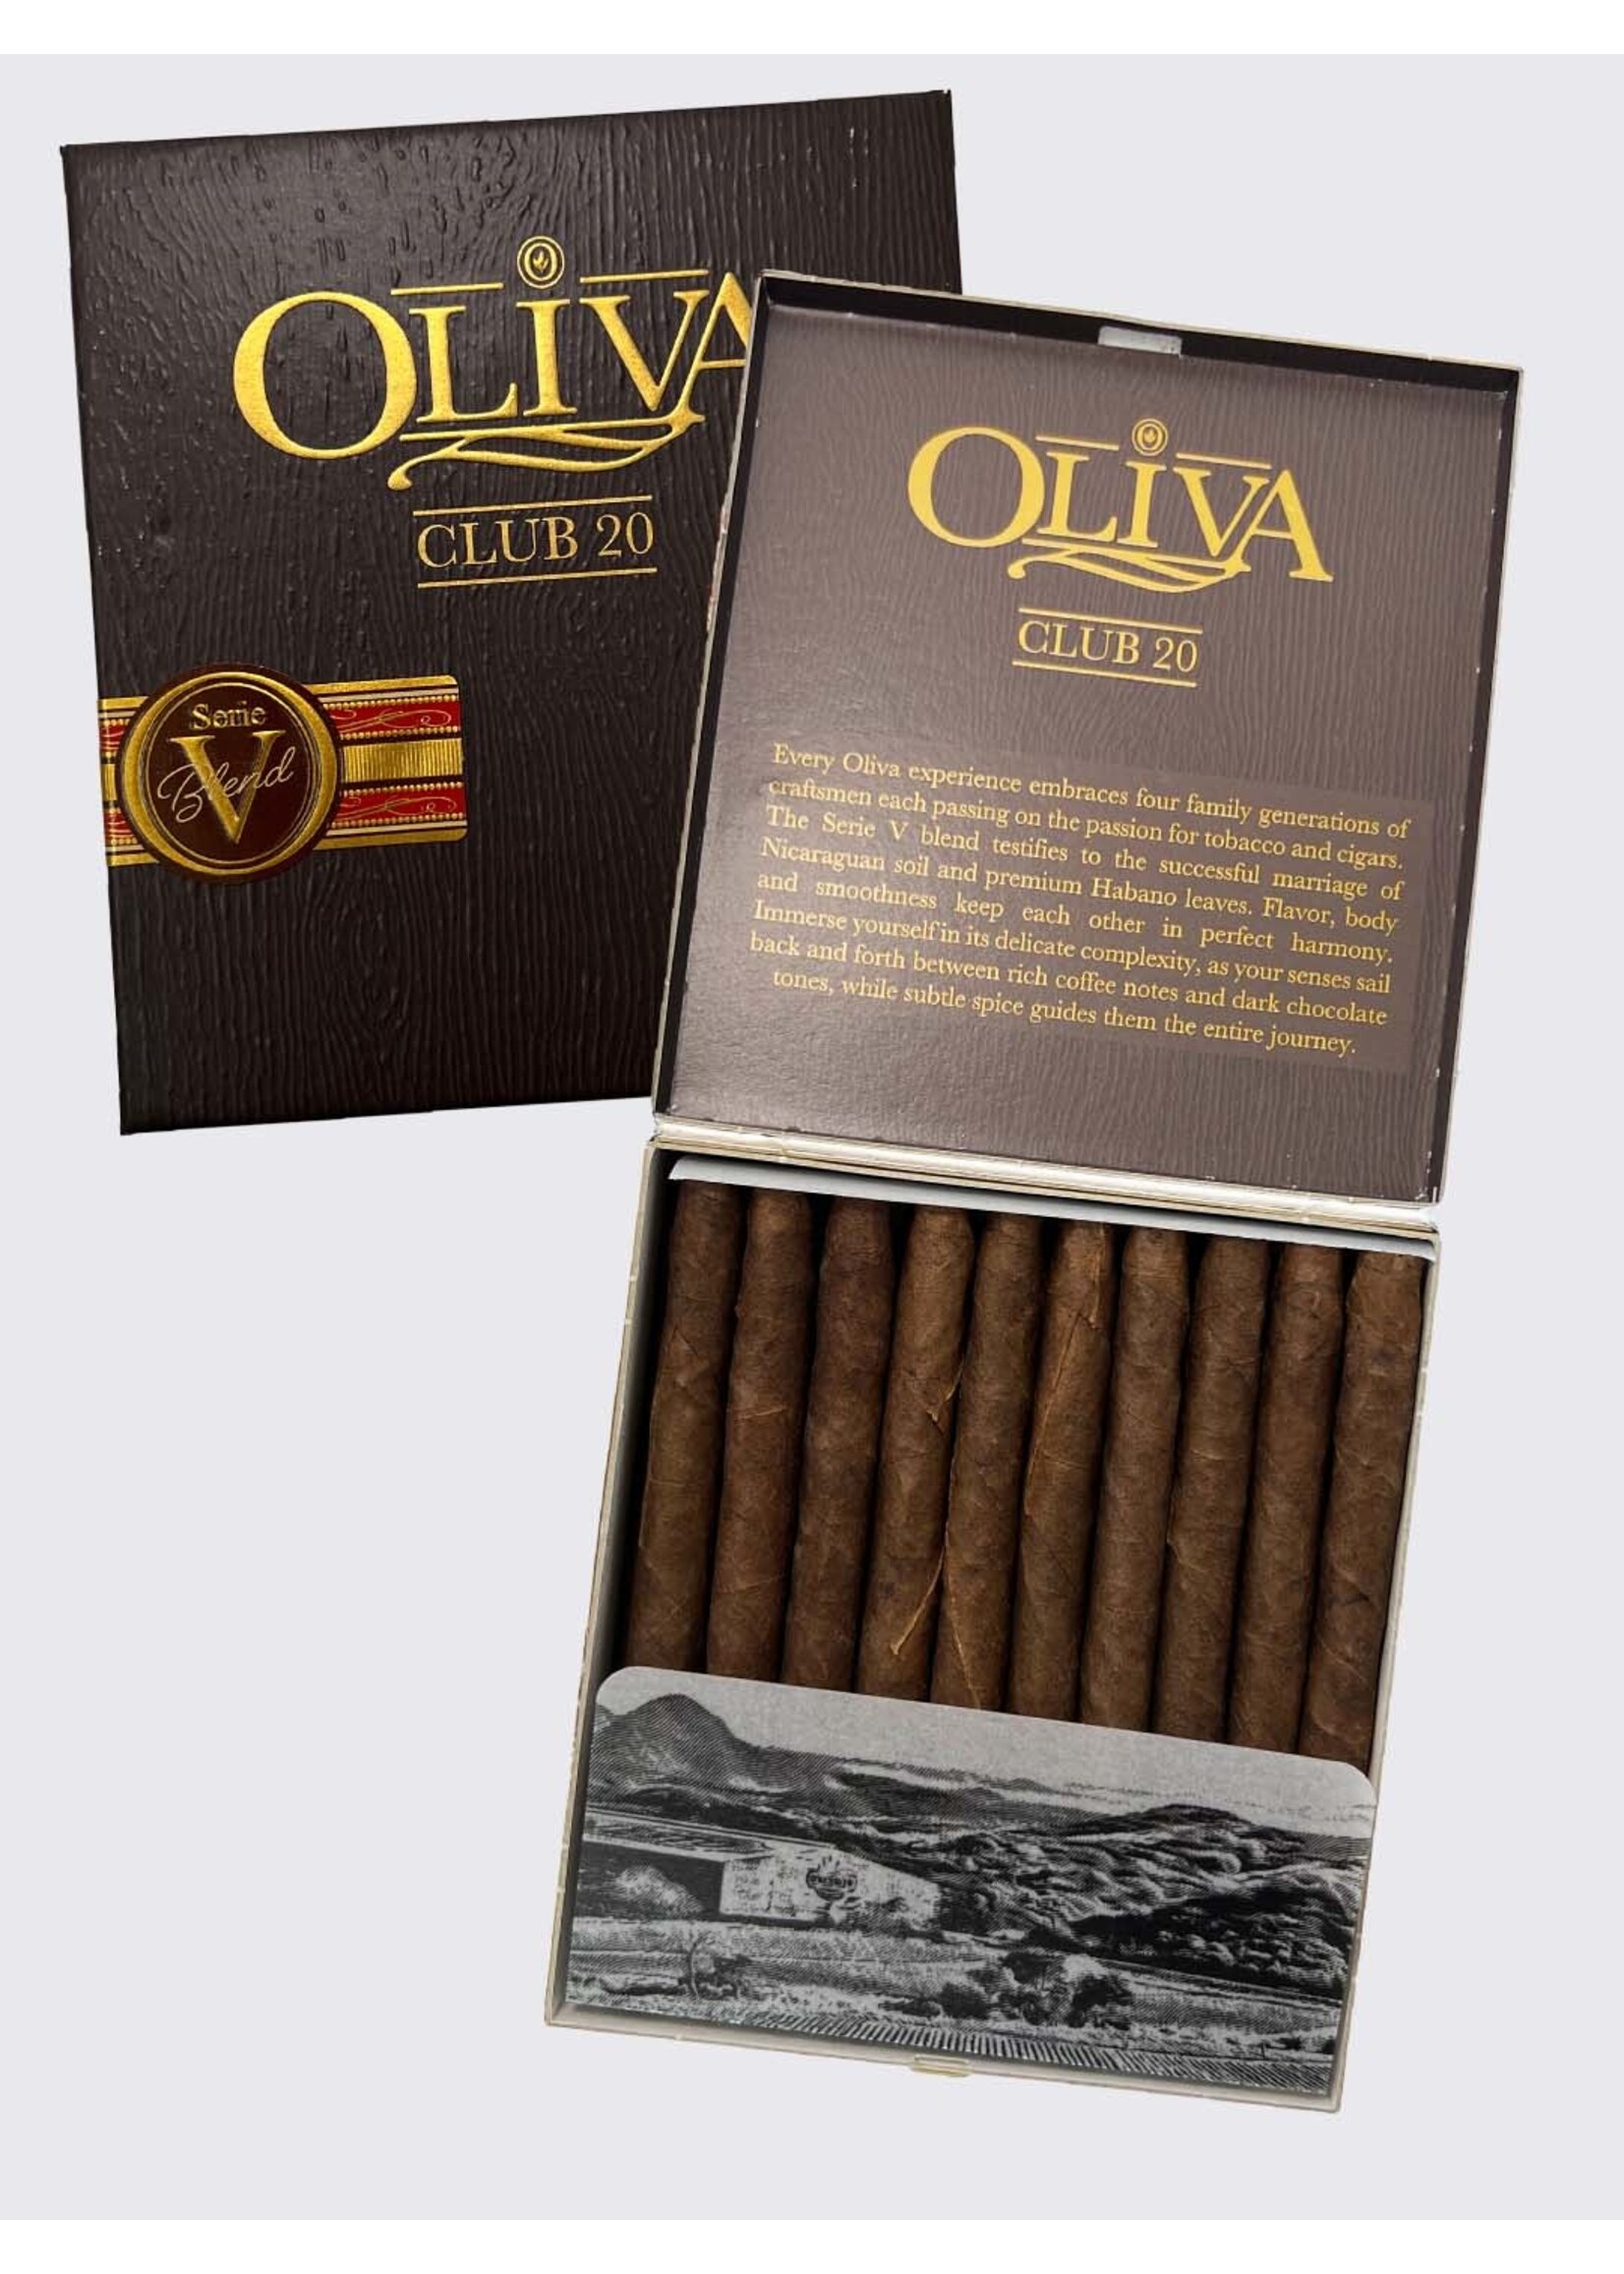 Oliva Oliva Serie V Club 3.78x22 20 pack